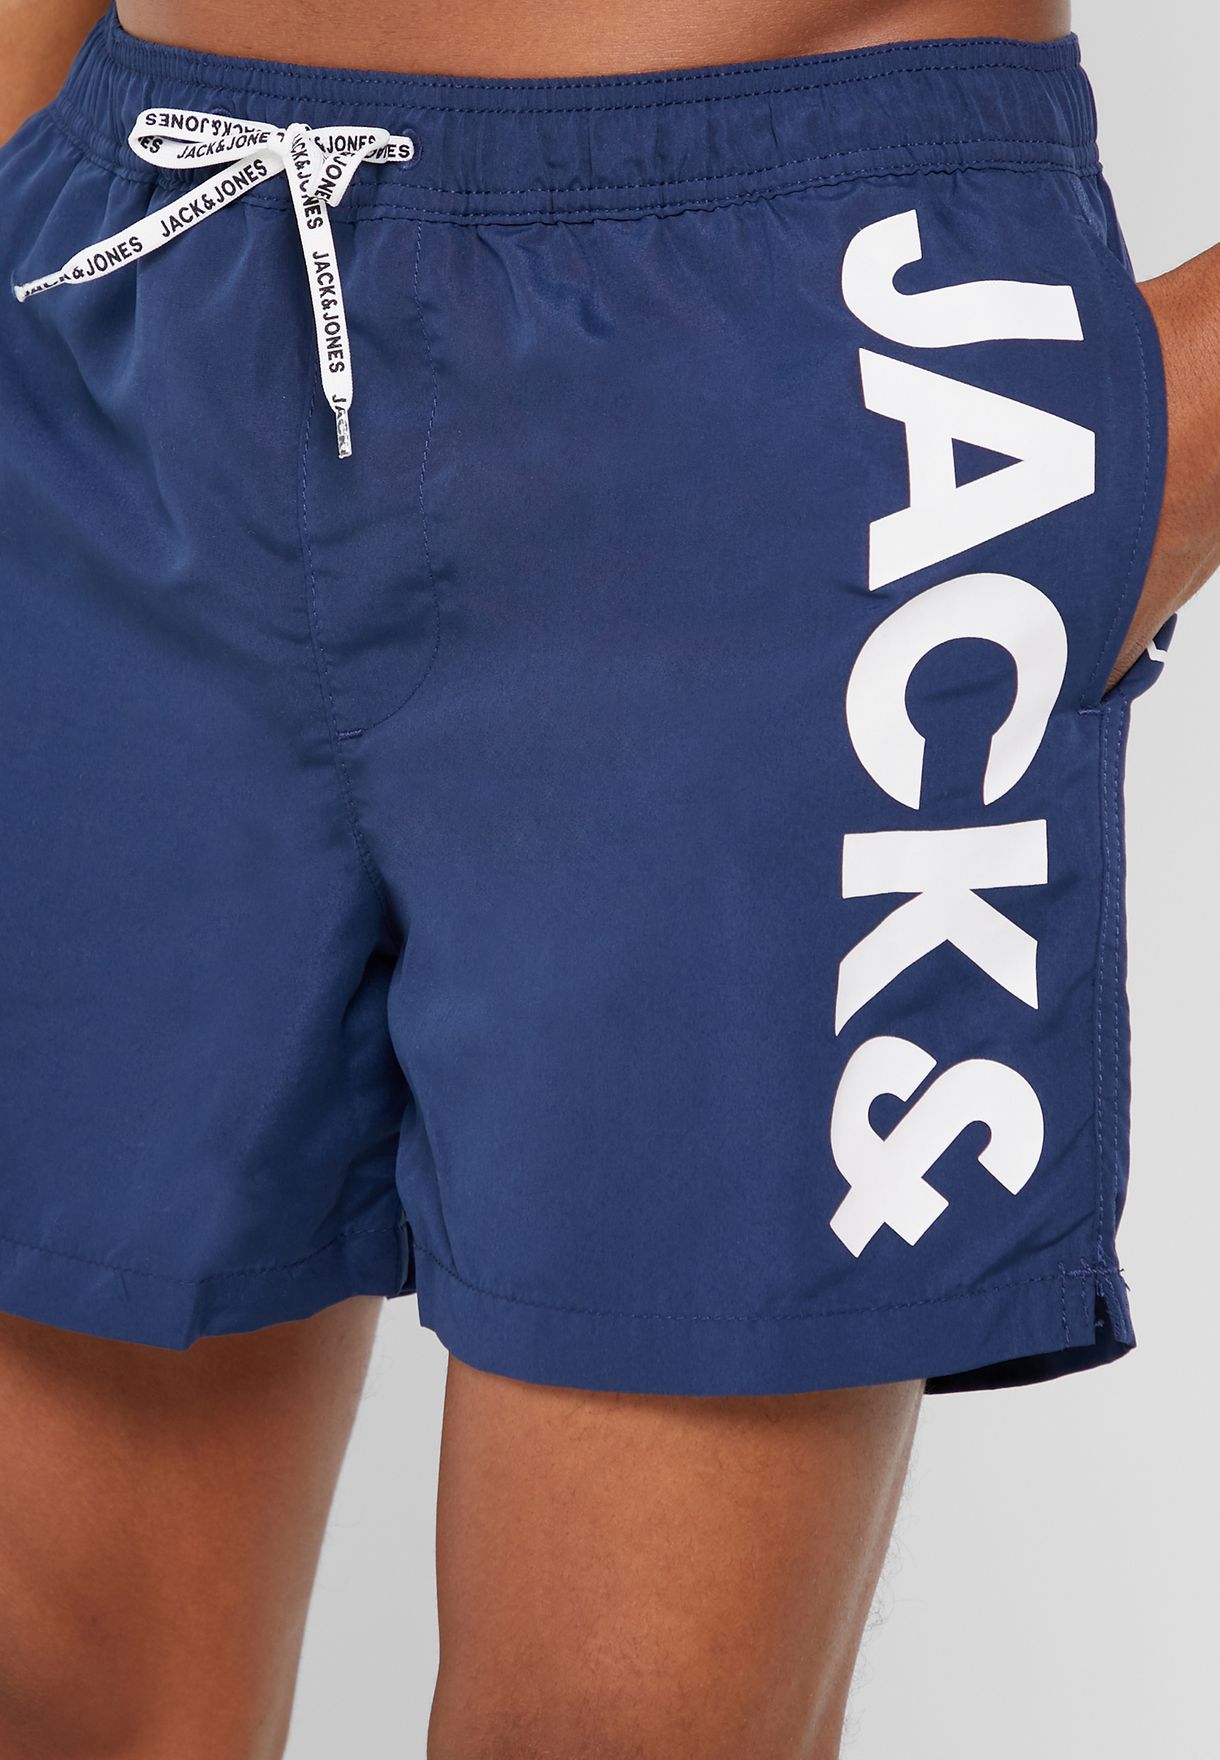 Jack and Jones Mens Cali Swim Shorts Pants Trousers Bottoms Lightweight Mesh 